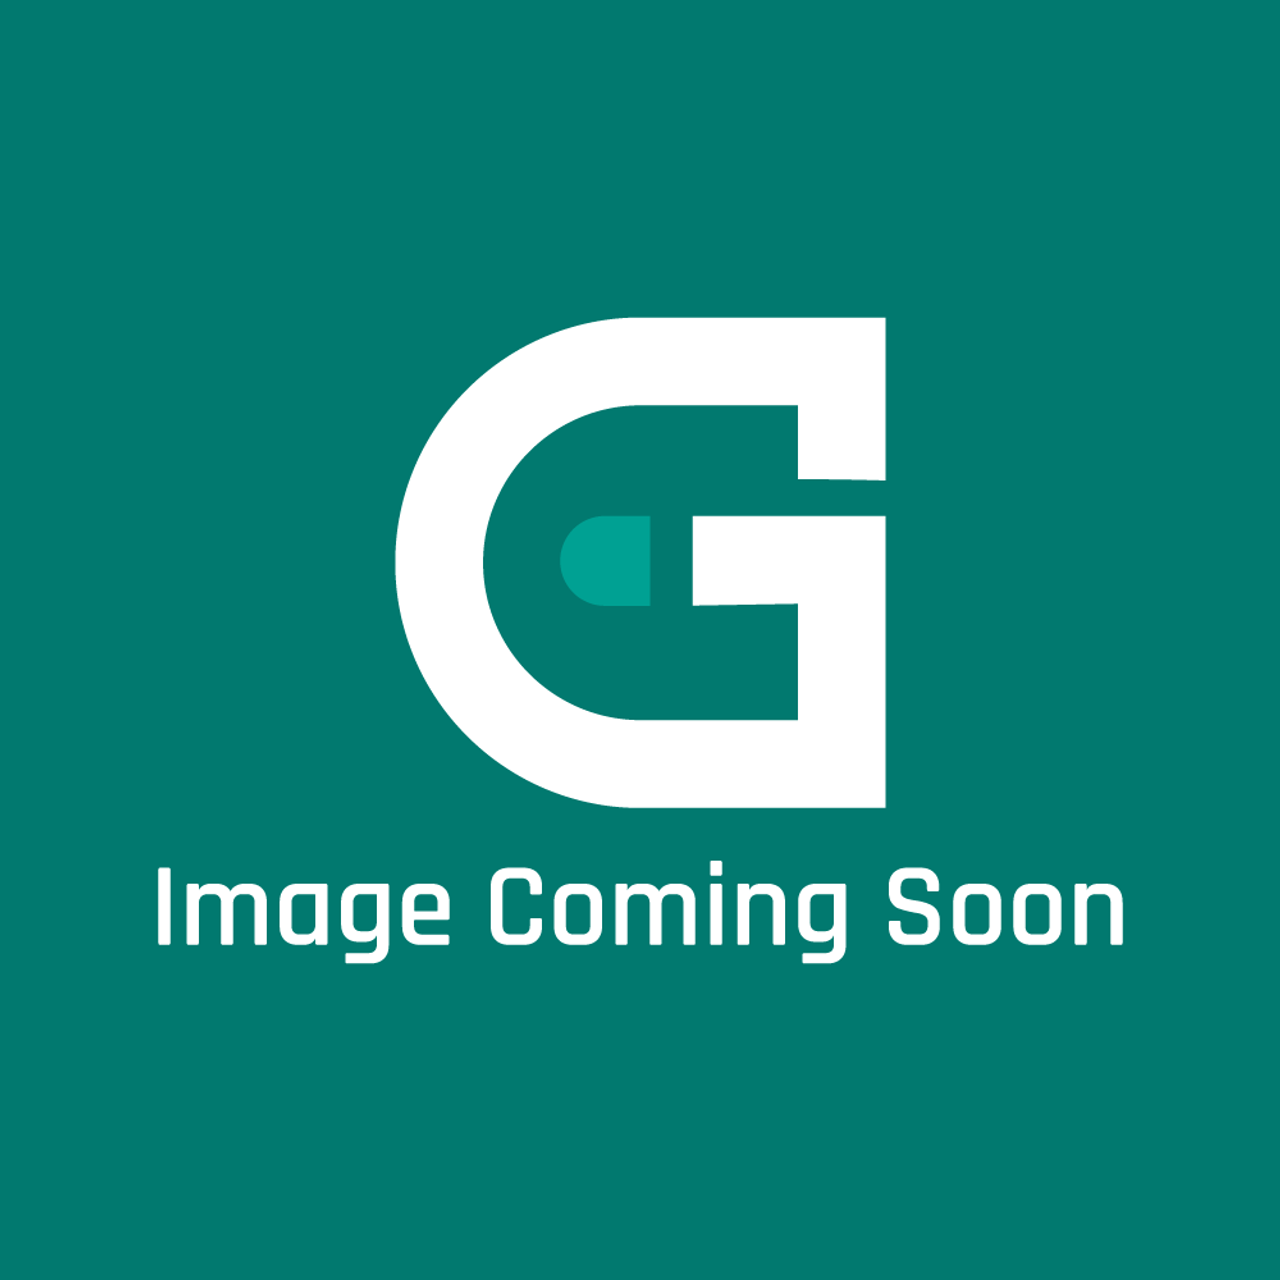 Frigidaire - Electrolux 5304499938 Compressor - Image Coming Soon!